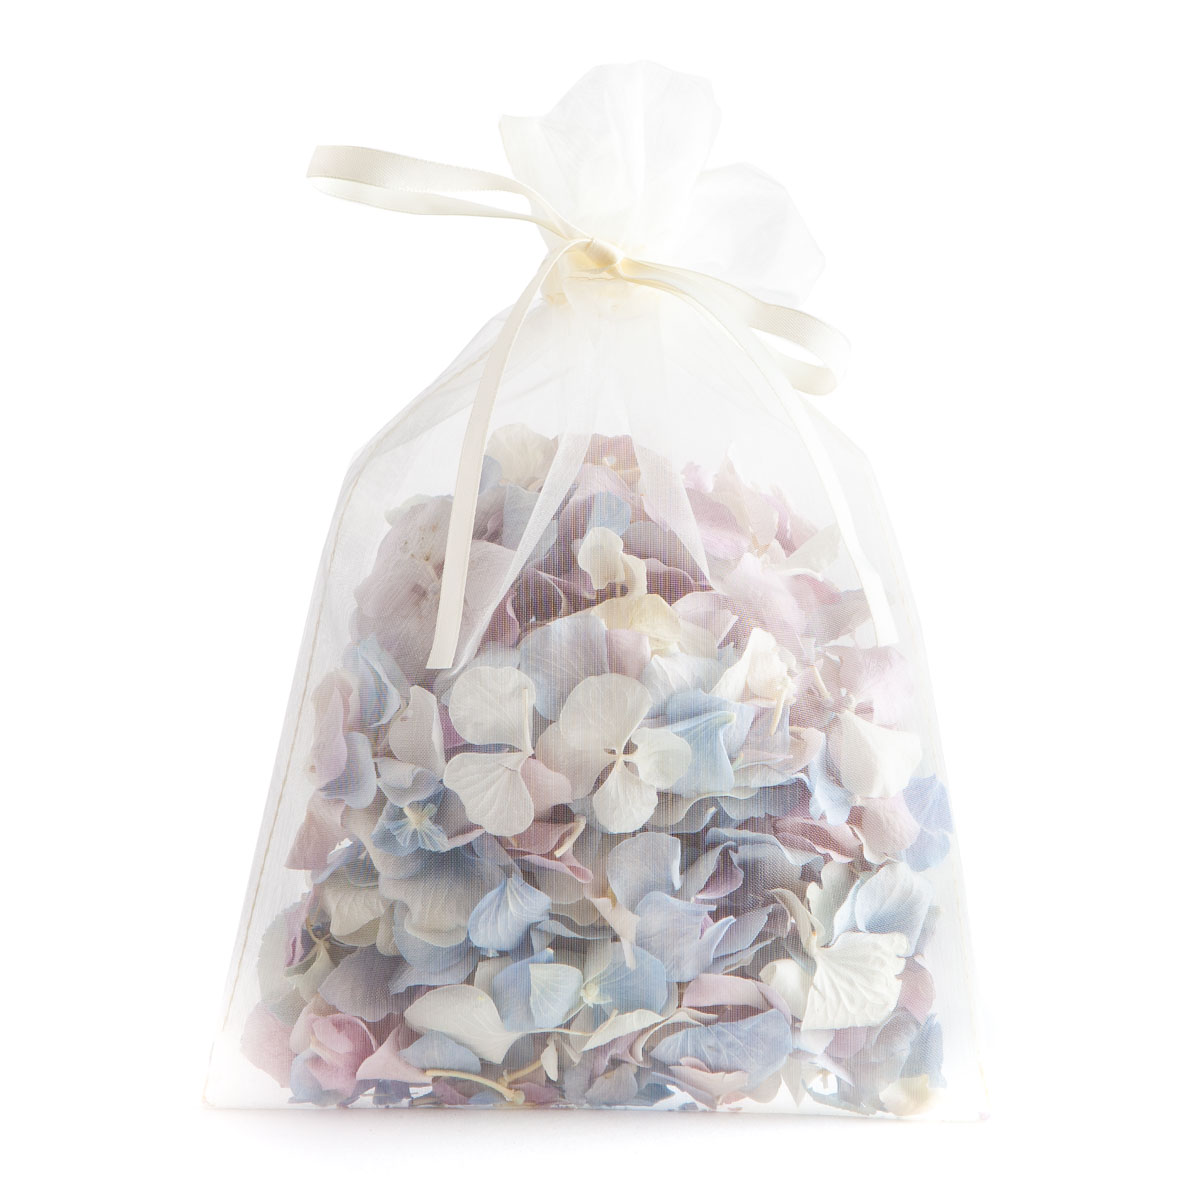 Biodegradable Confetti - Lilac, Blue & White Hydrangea Petals - 10 Handful Bag